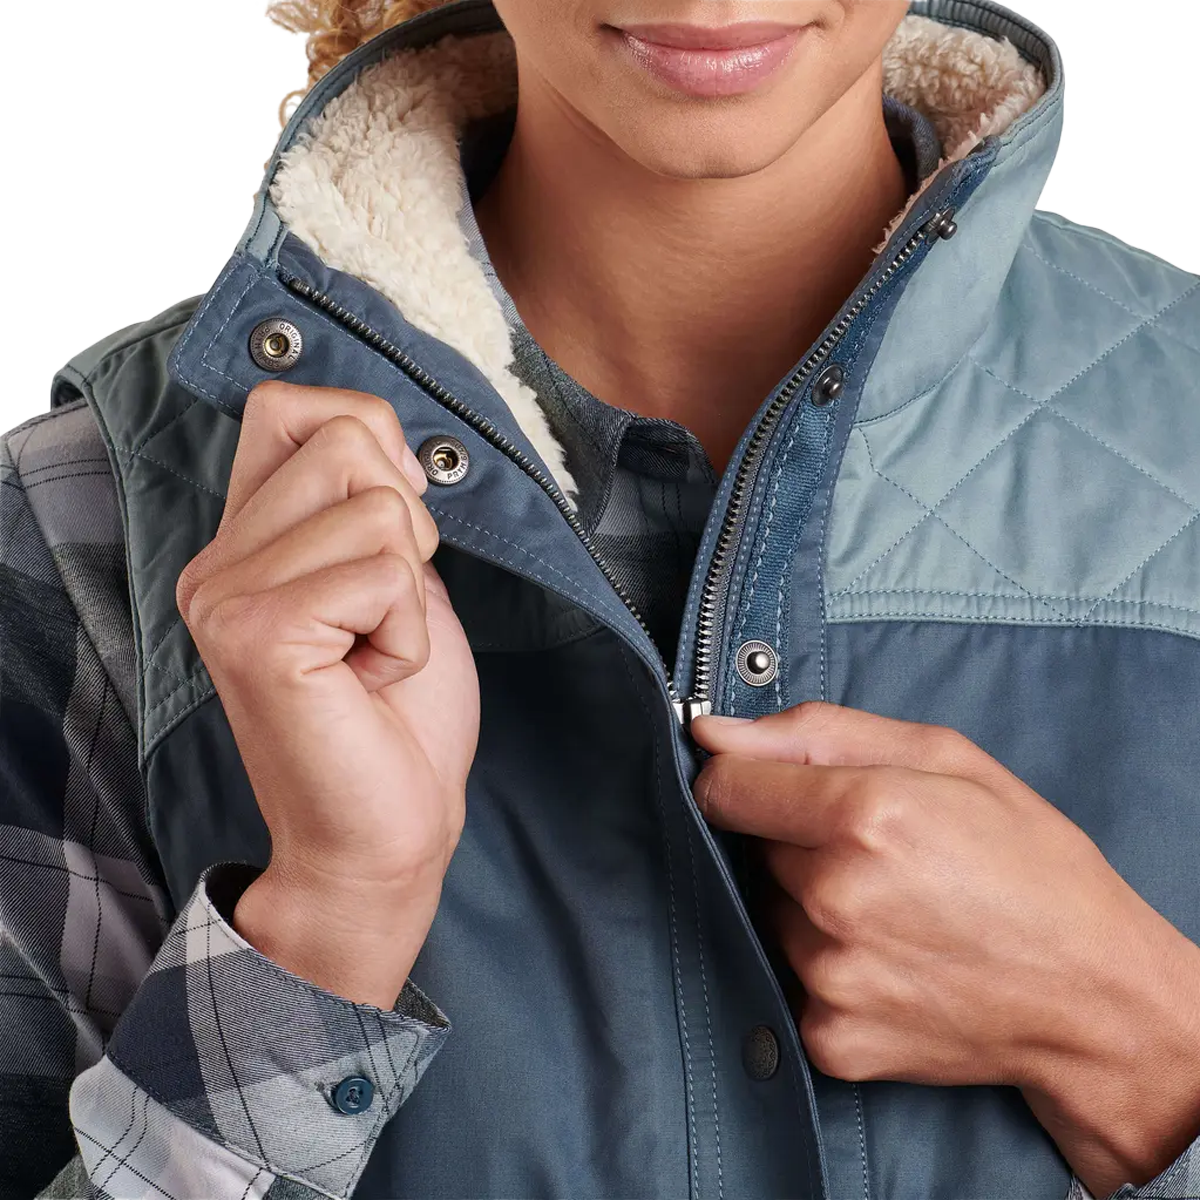 Women's Kuhl, Soft Plush Italian Fleece Flight Jacket